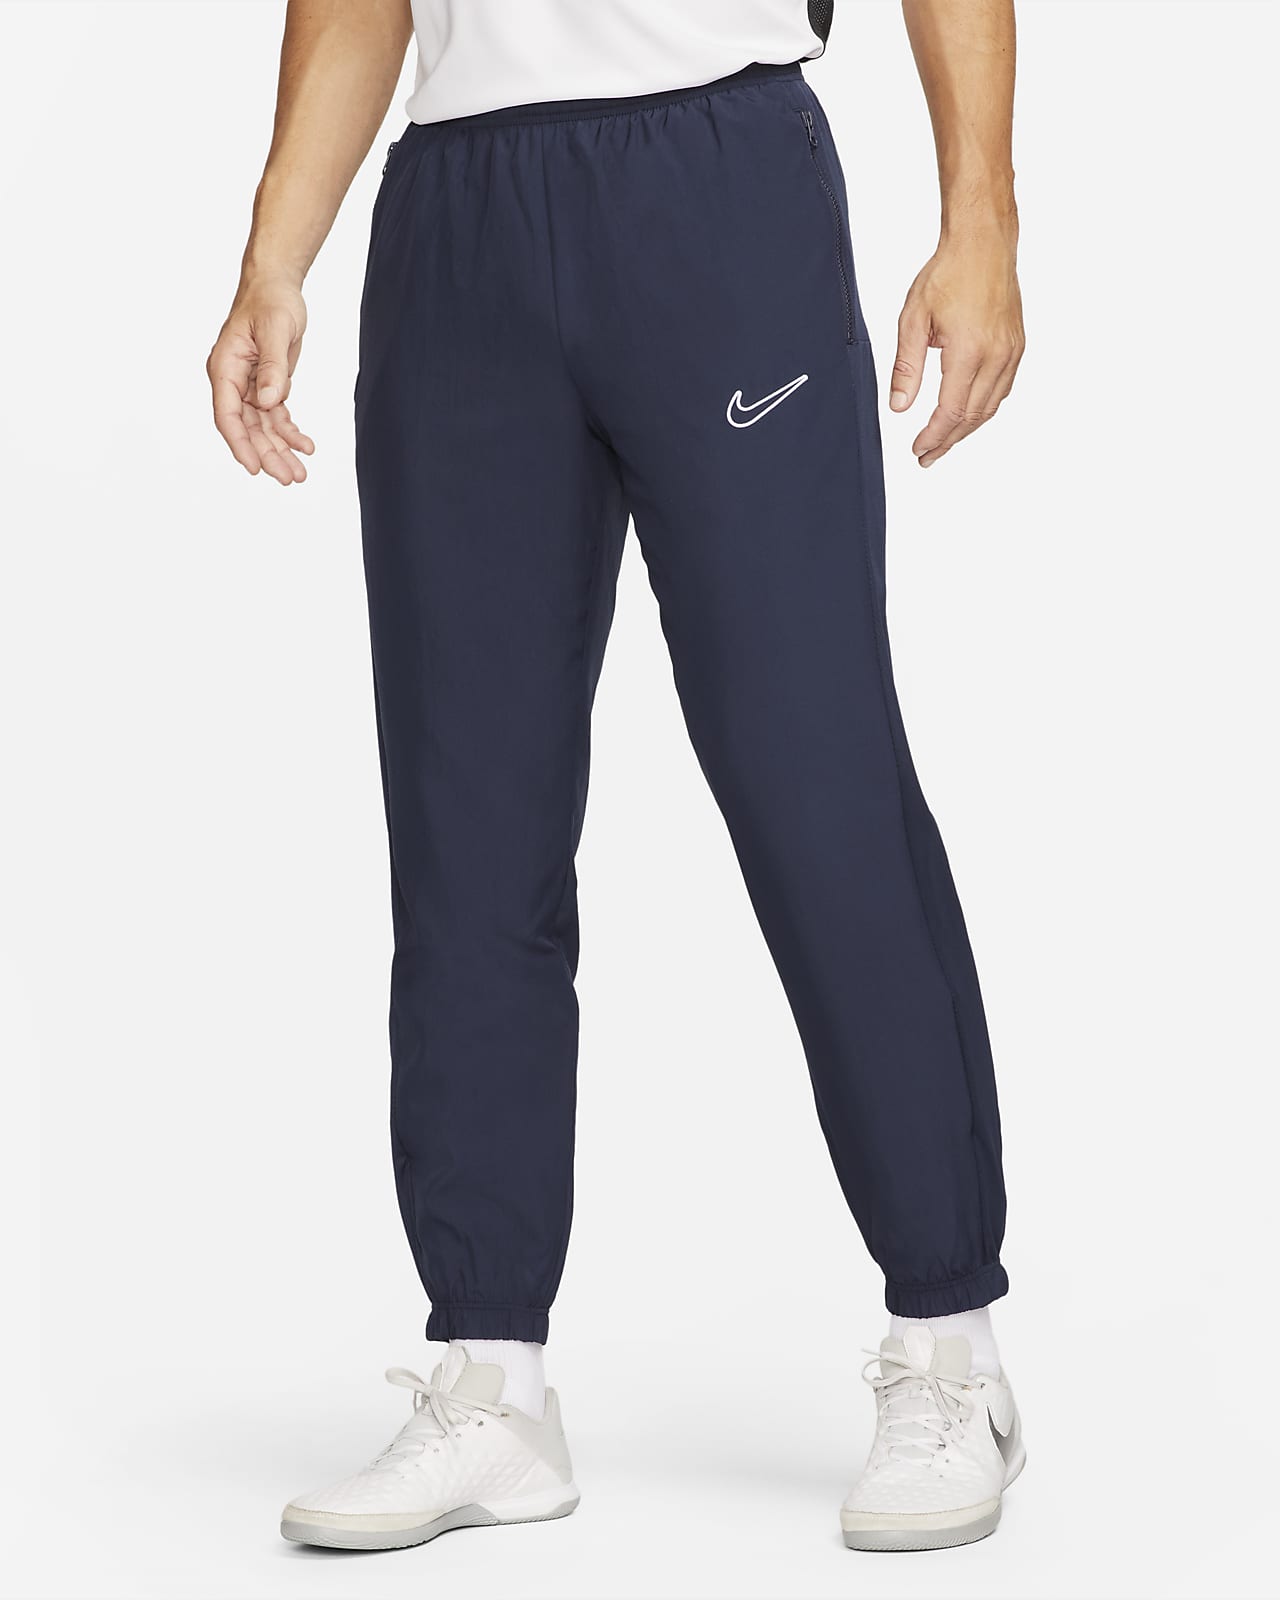 Pantaloni da calcio Dri-FIT Nike Academy – Uomo